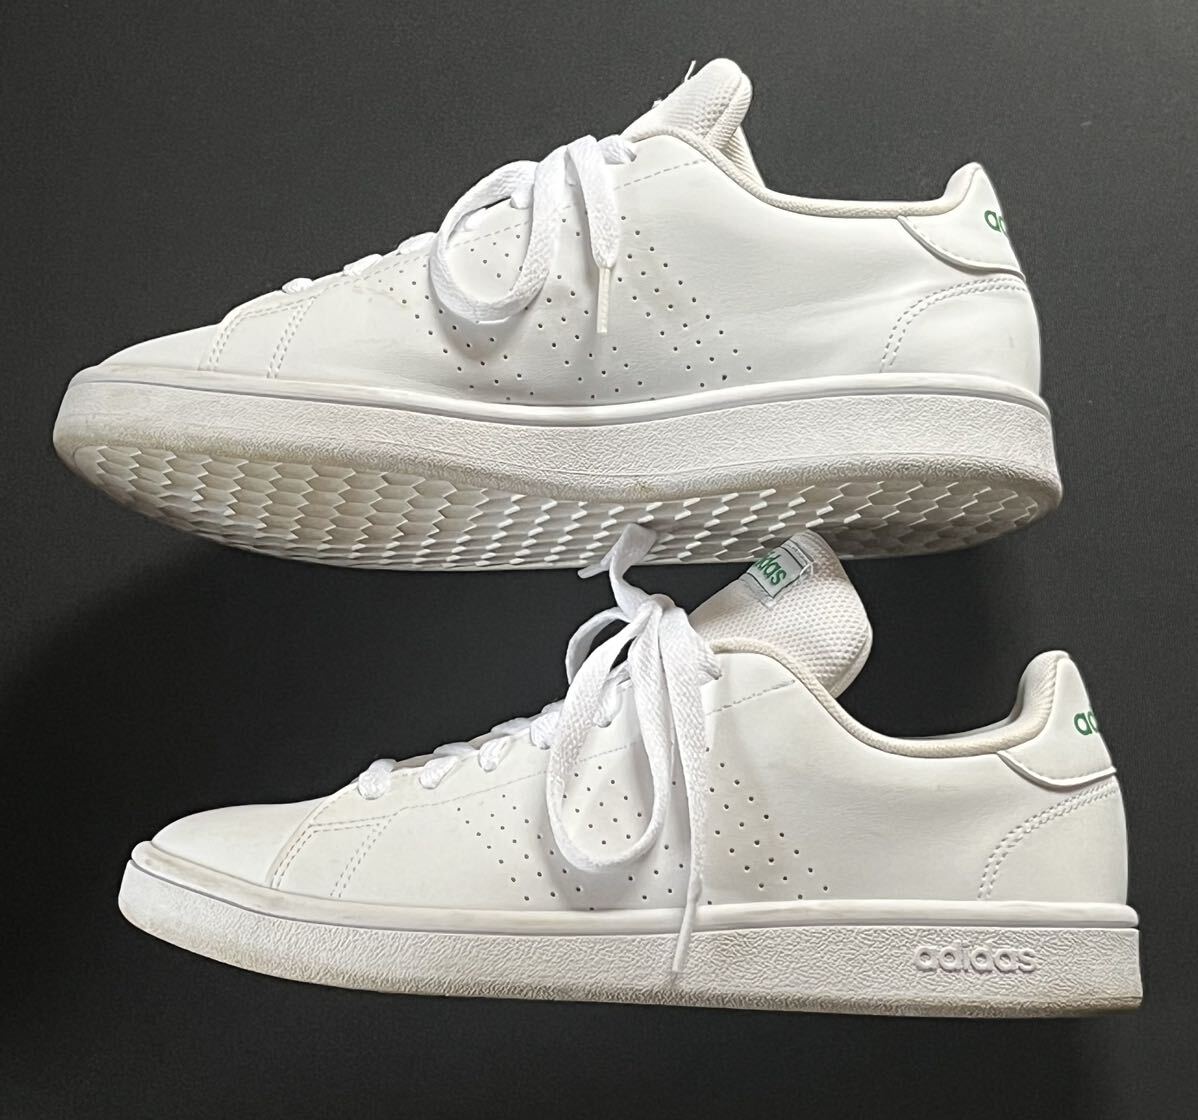 adidas* Adidas *(24.0) Advan coat base EE7690 sneakers shoes / white + green 